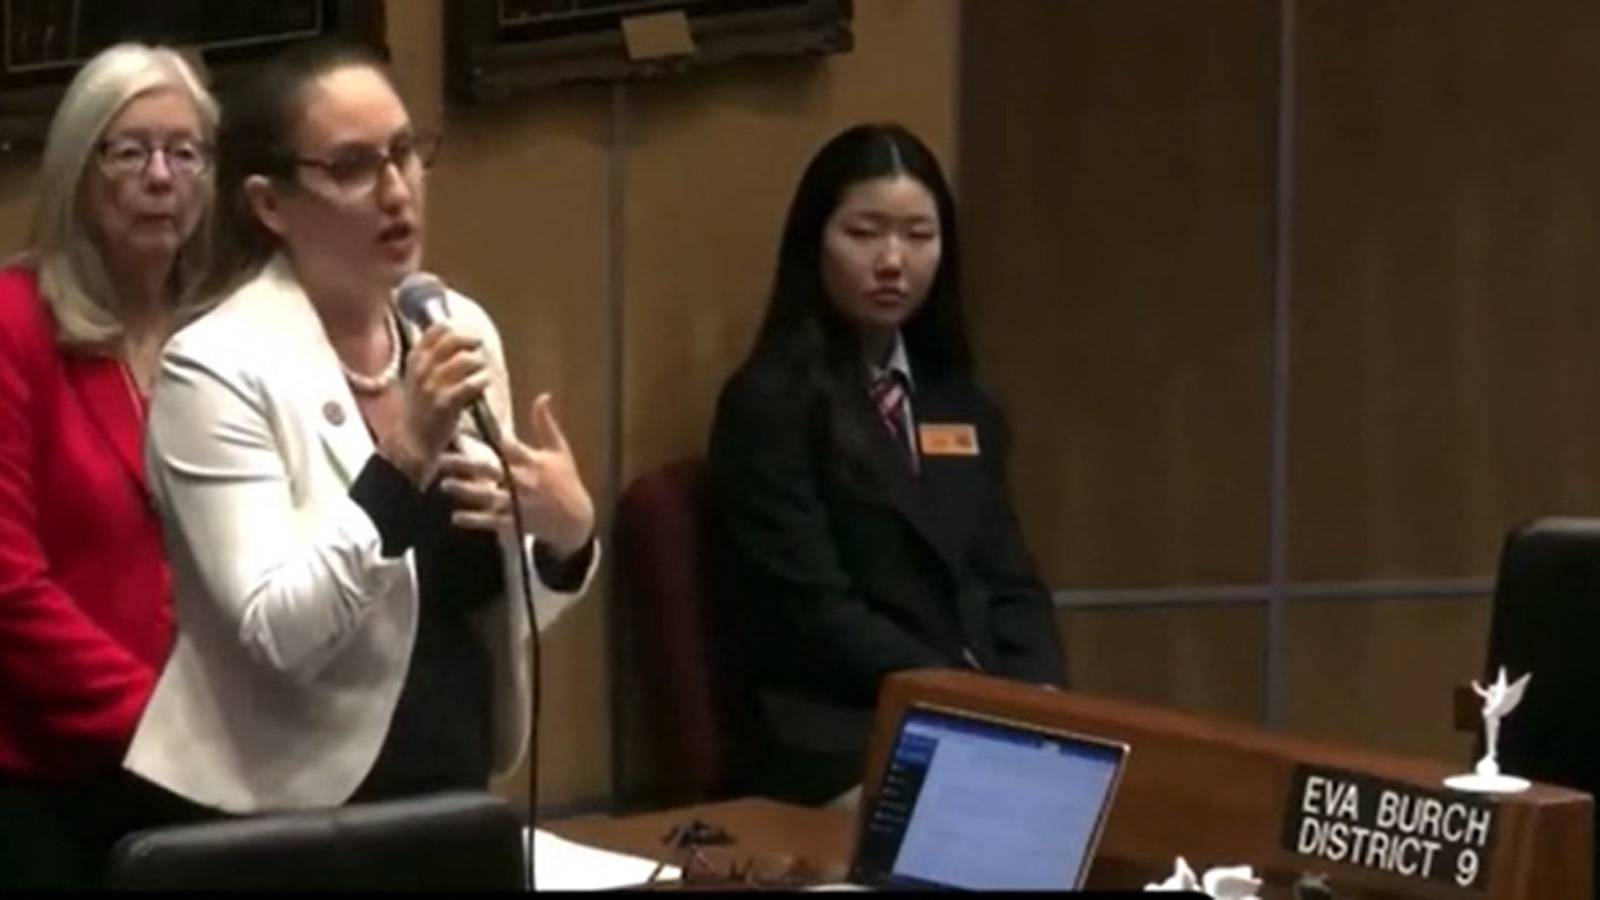 A screenshot of Arizona state Sen. Eva Burch speaking on the Senate floor....